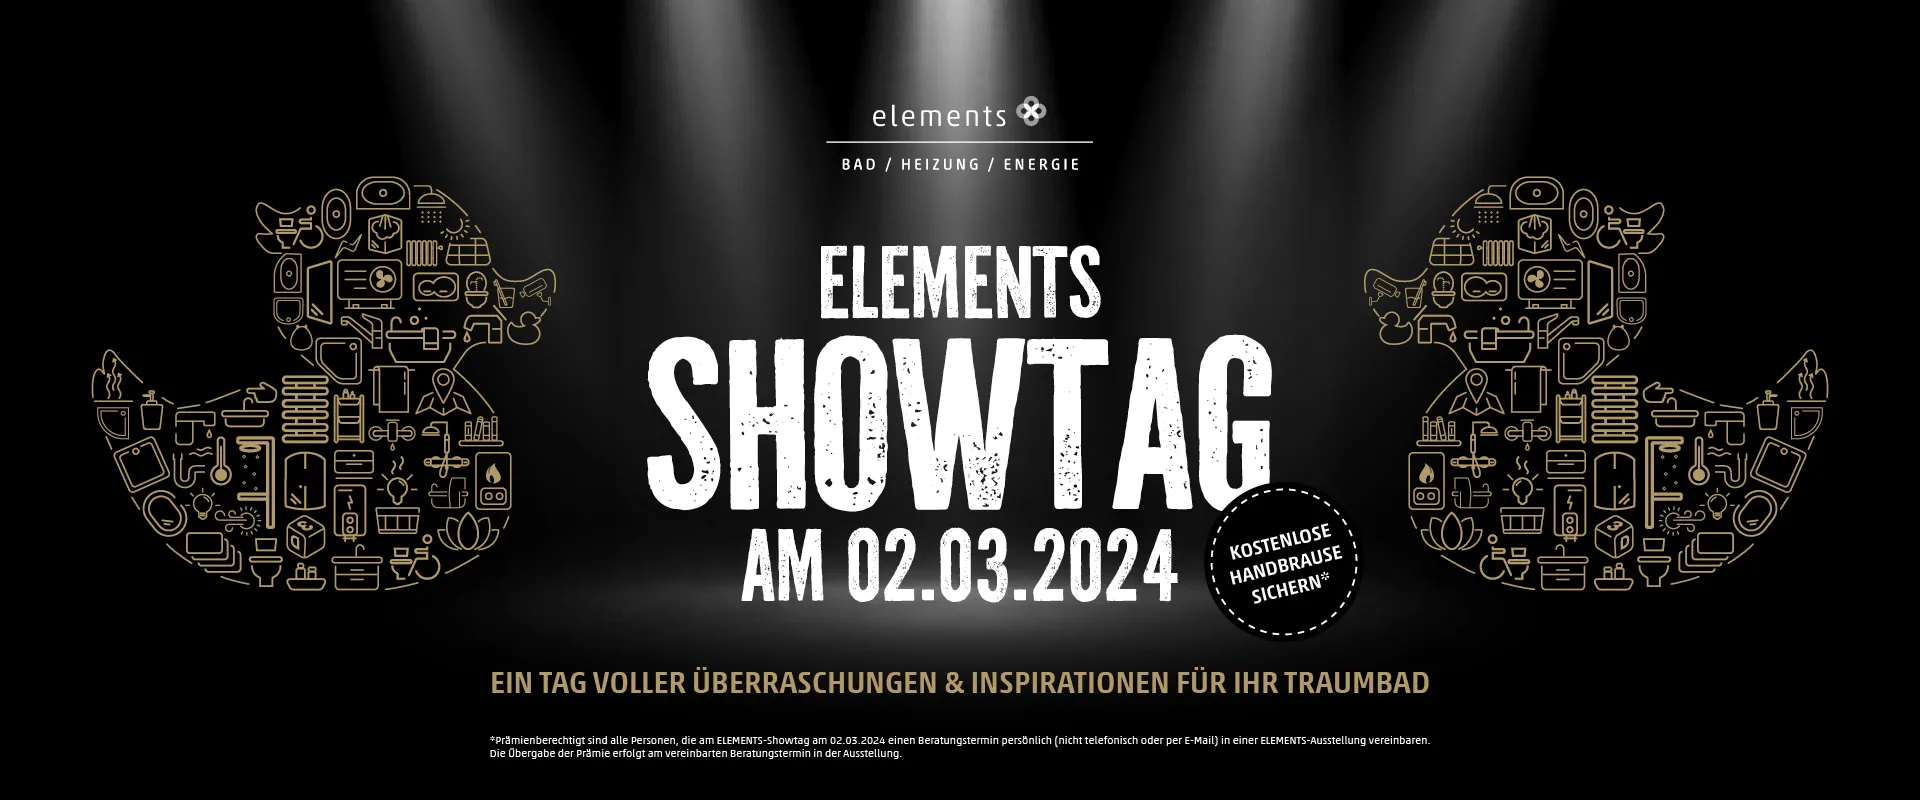 Elements_Showtag_Webbanner_1920x800_v1.jpg